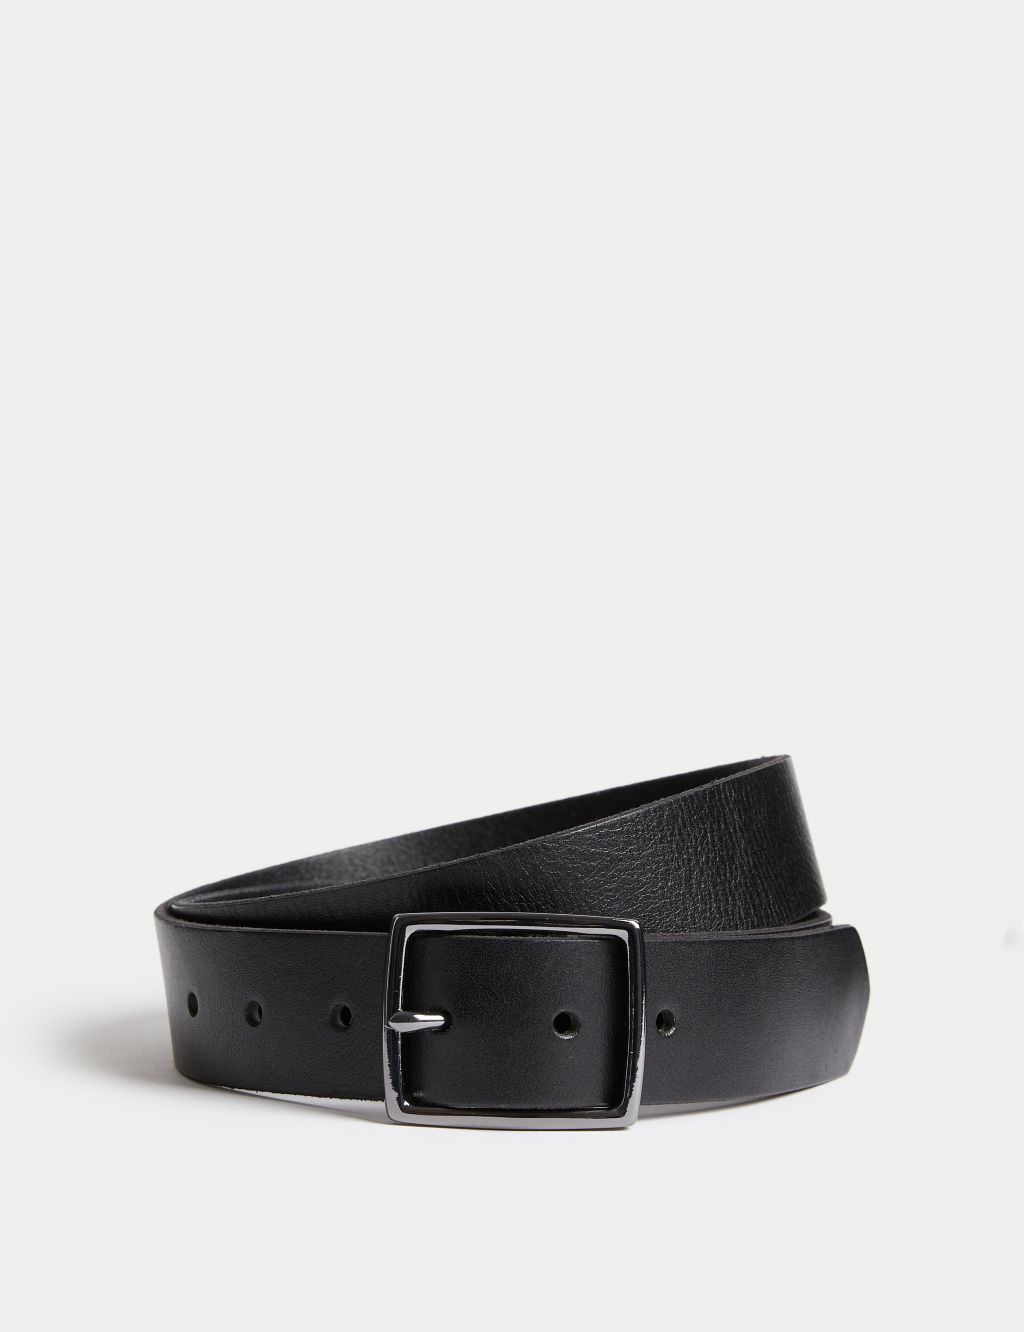 Leather Rectangular Buckle Smart Belt image 1